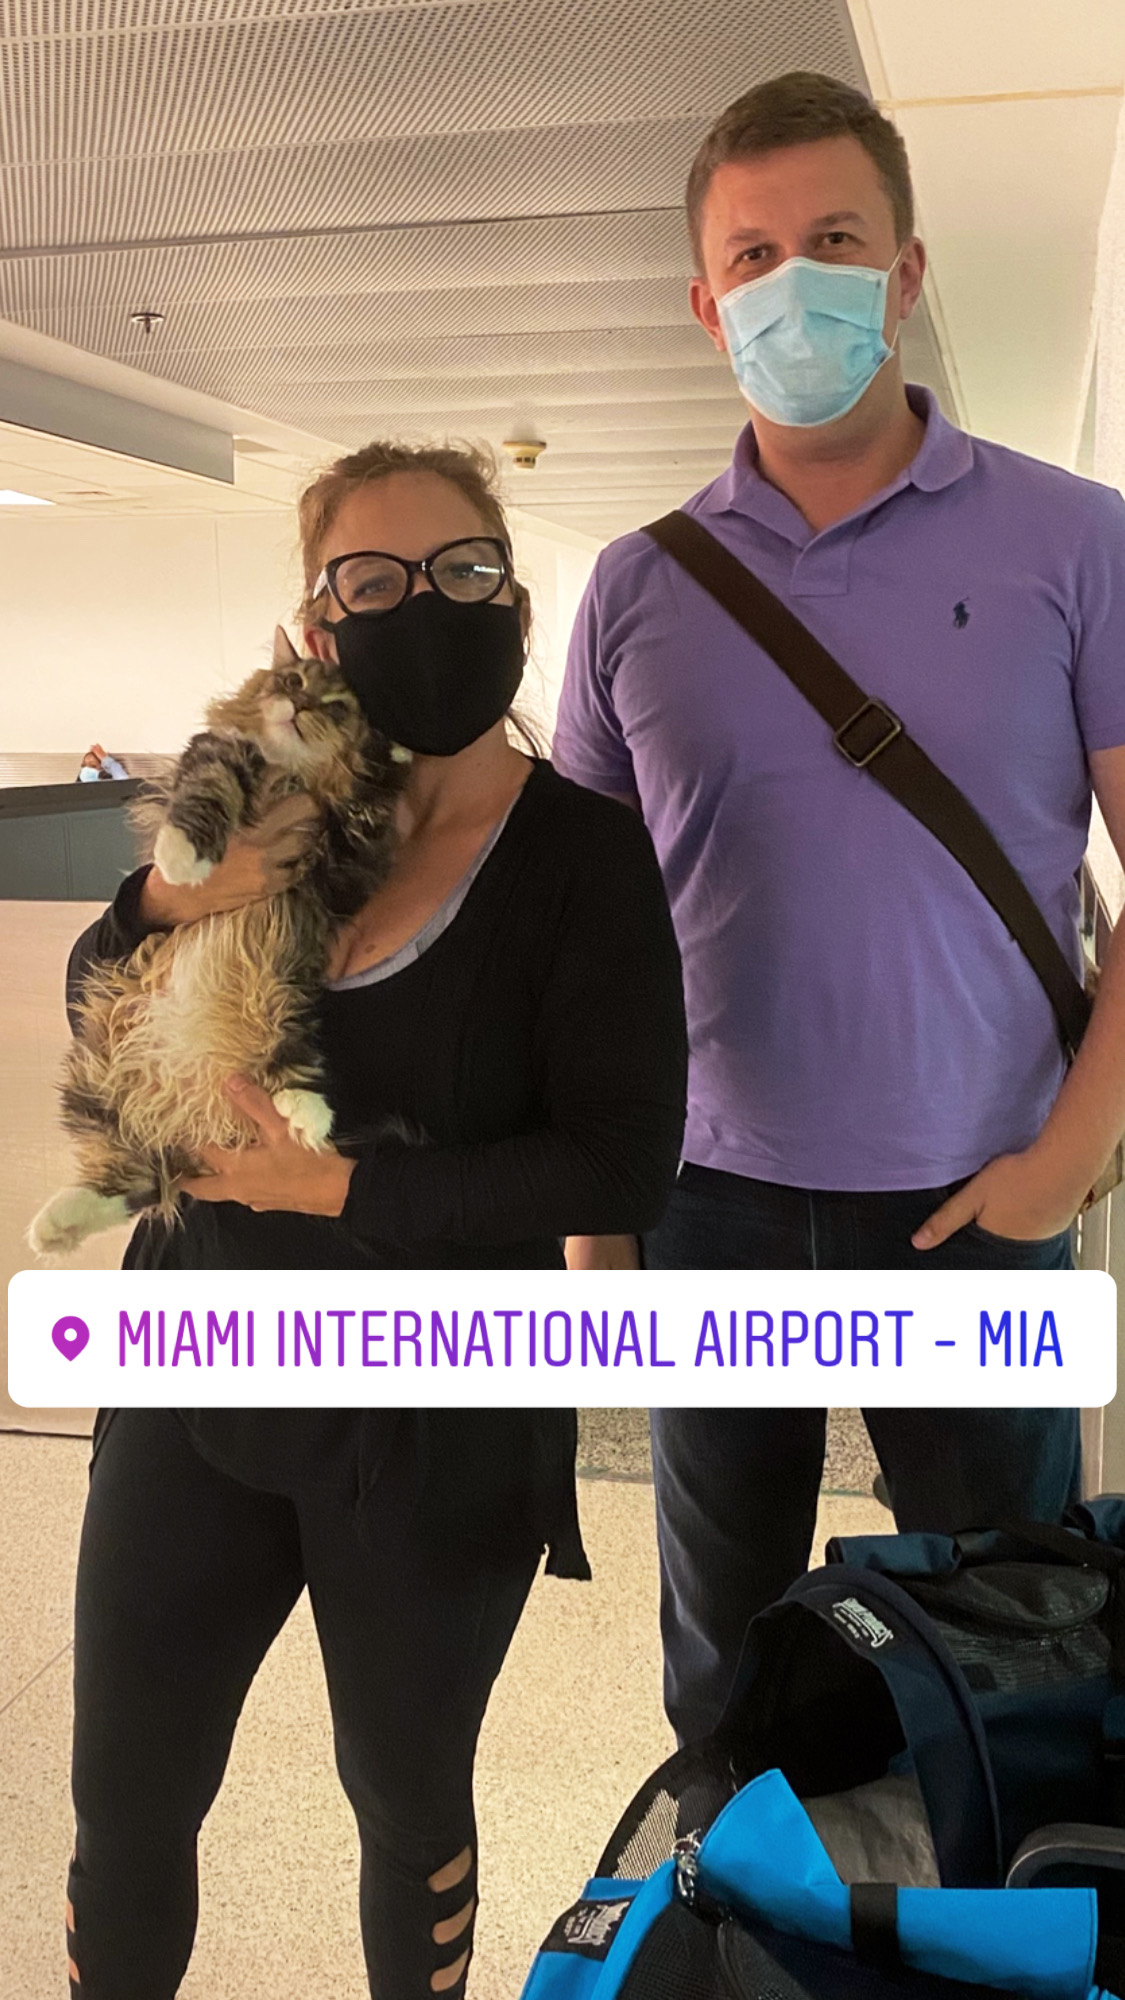 Ground Transport Cat From Miami to Orlando